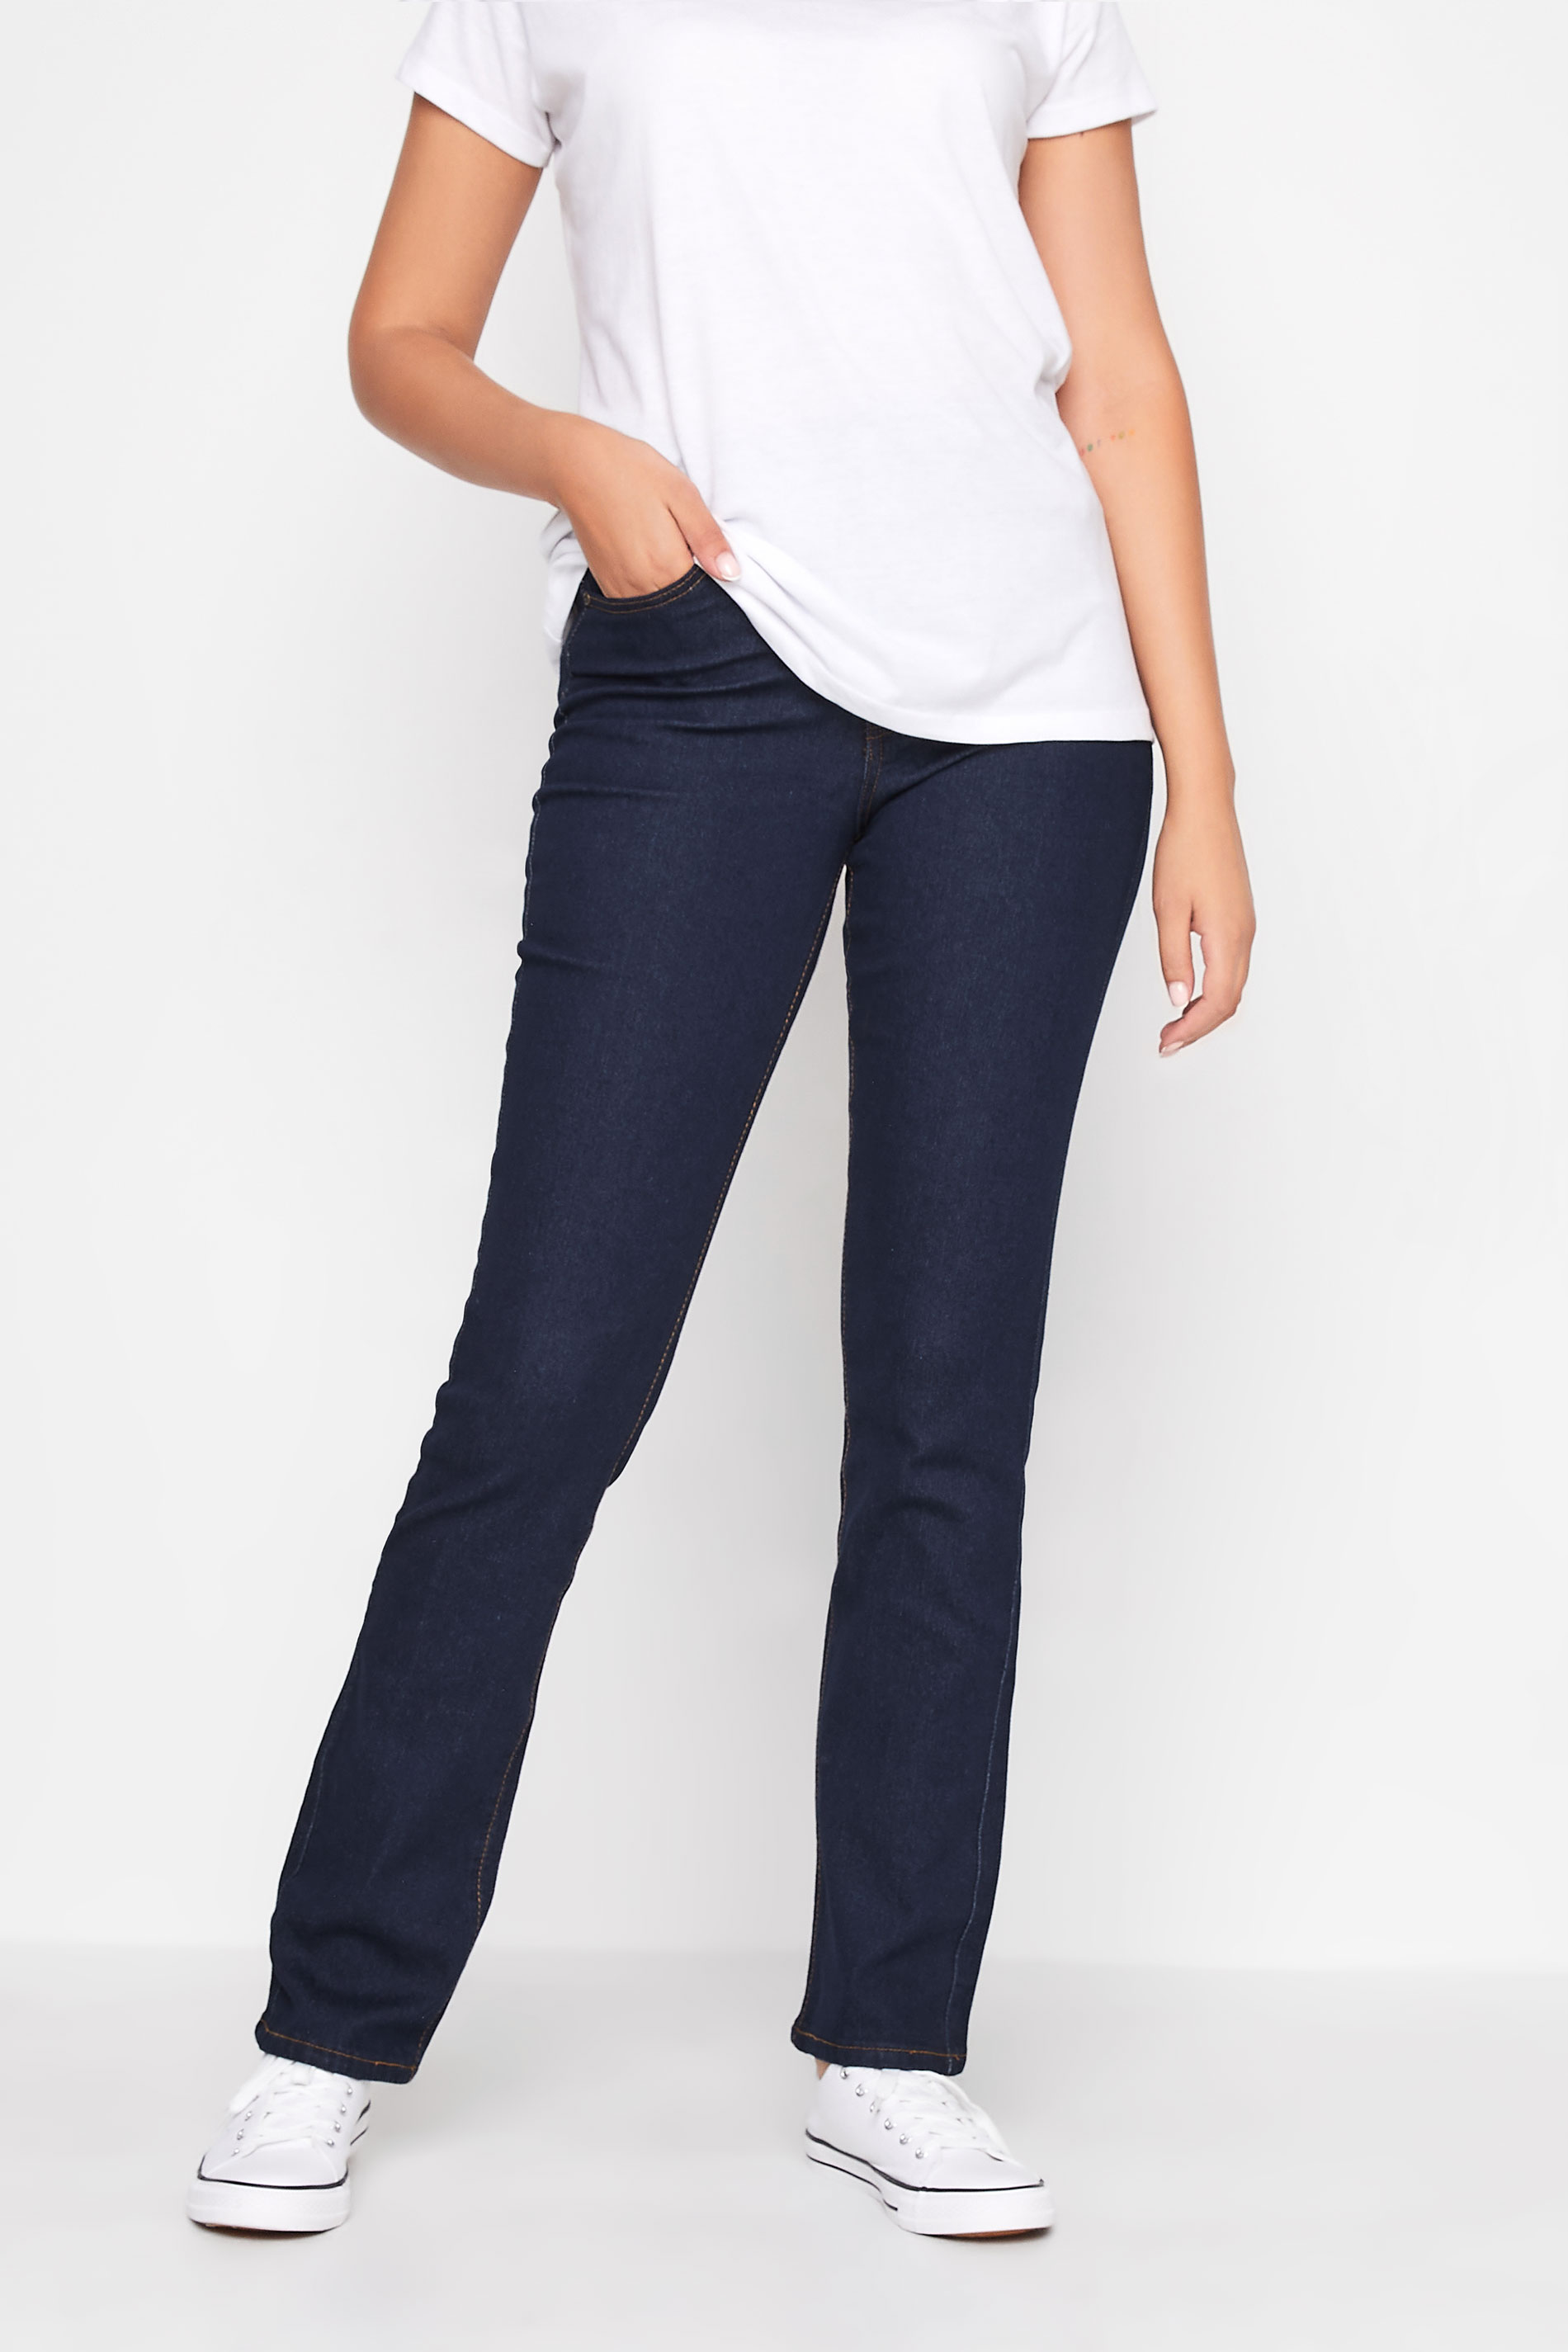 LTS Tall Women's Indigo Blue Straight Leg Jeans | Long Tall Sally  1